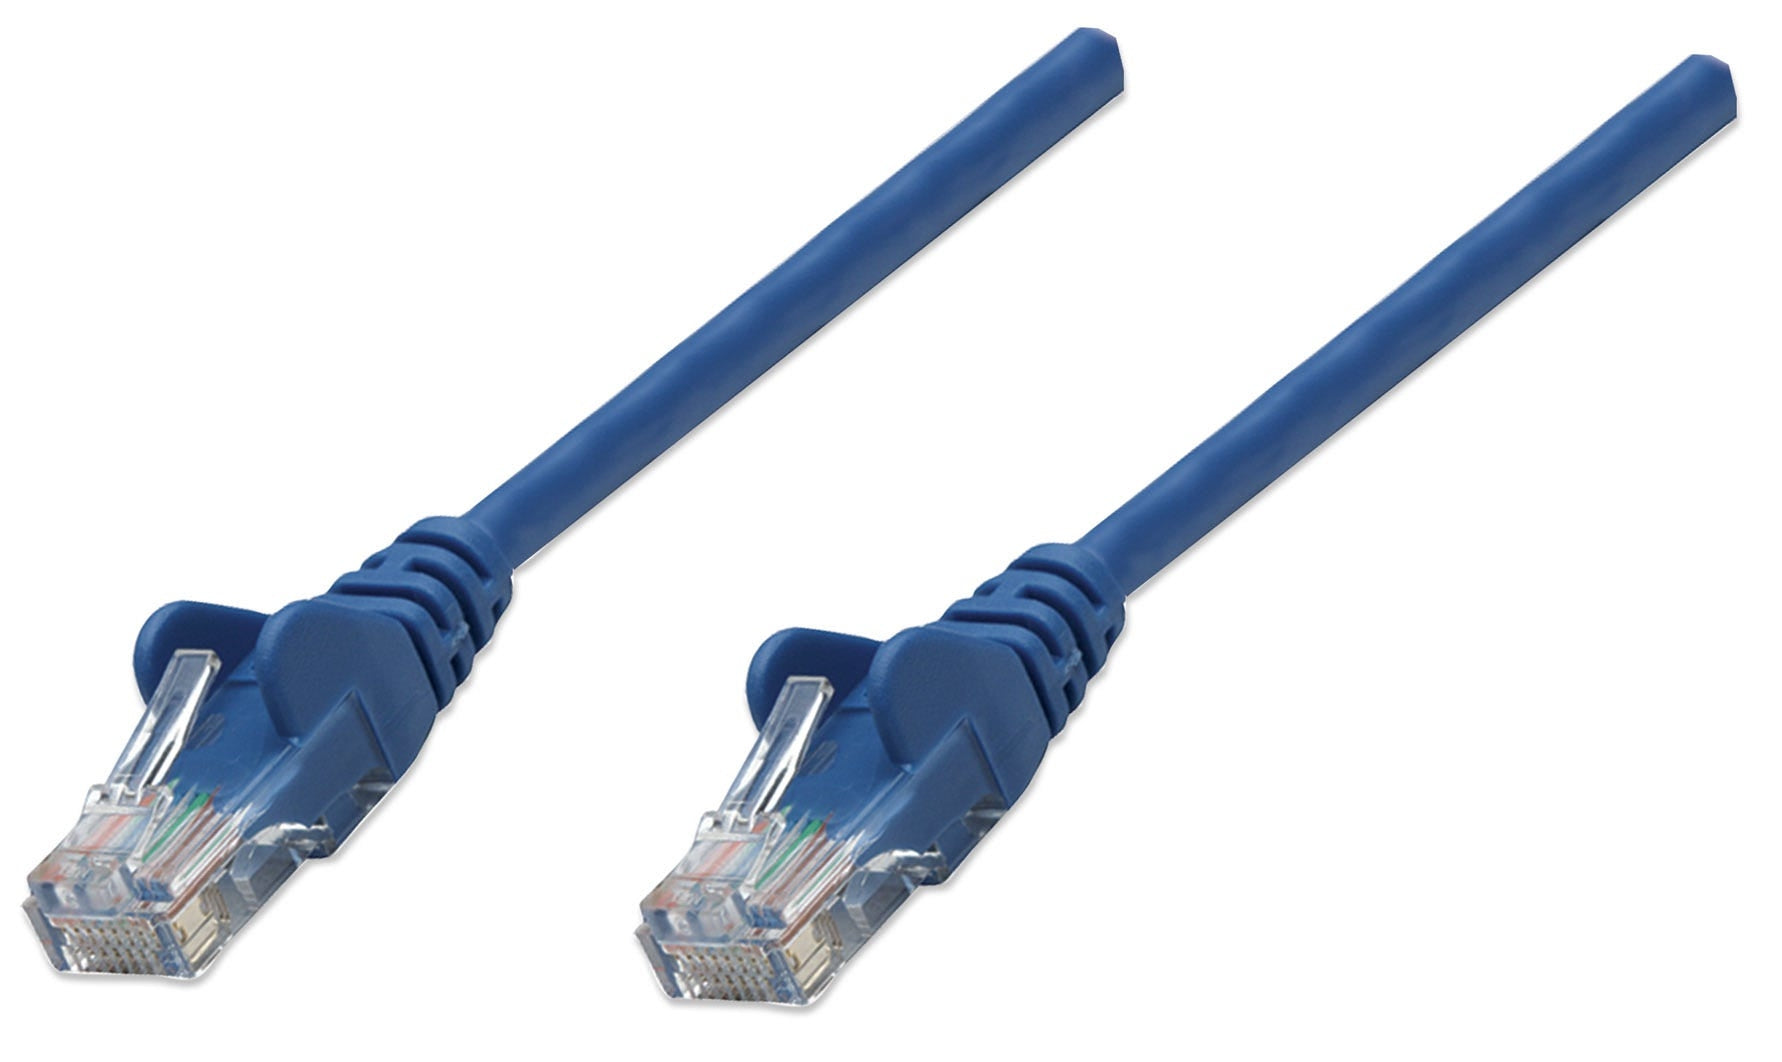 Cable De Red Cat 6 Intellinet 342575 Cat6 1 M Rj-45 Macho/Macho Azul